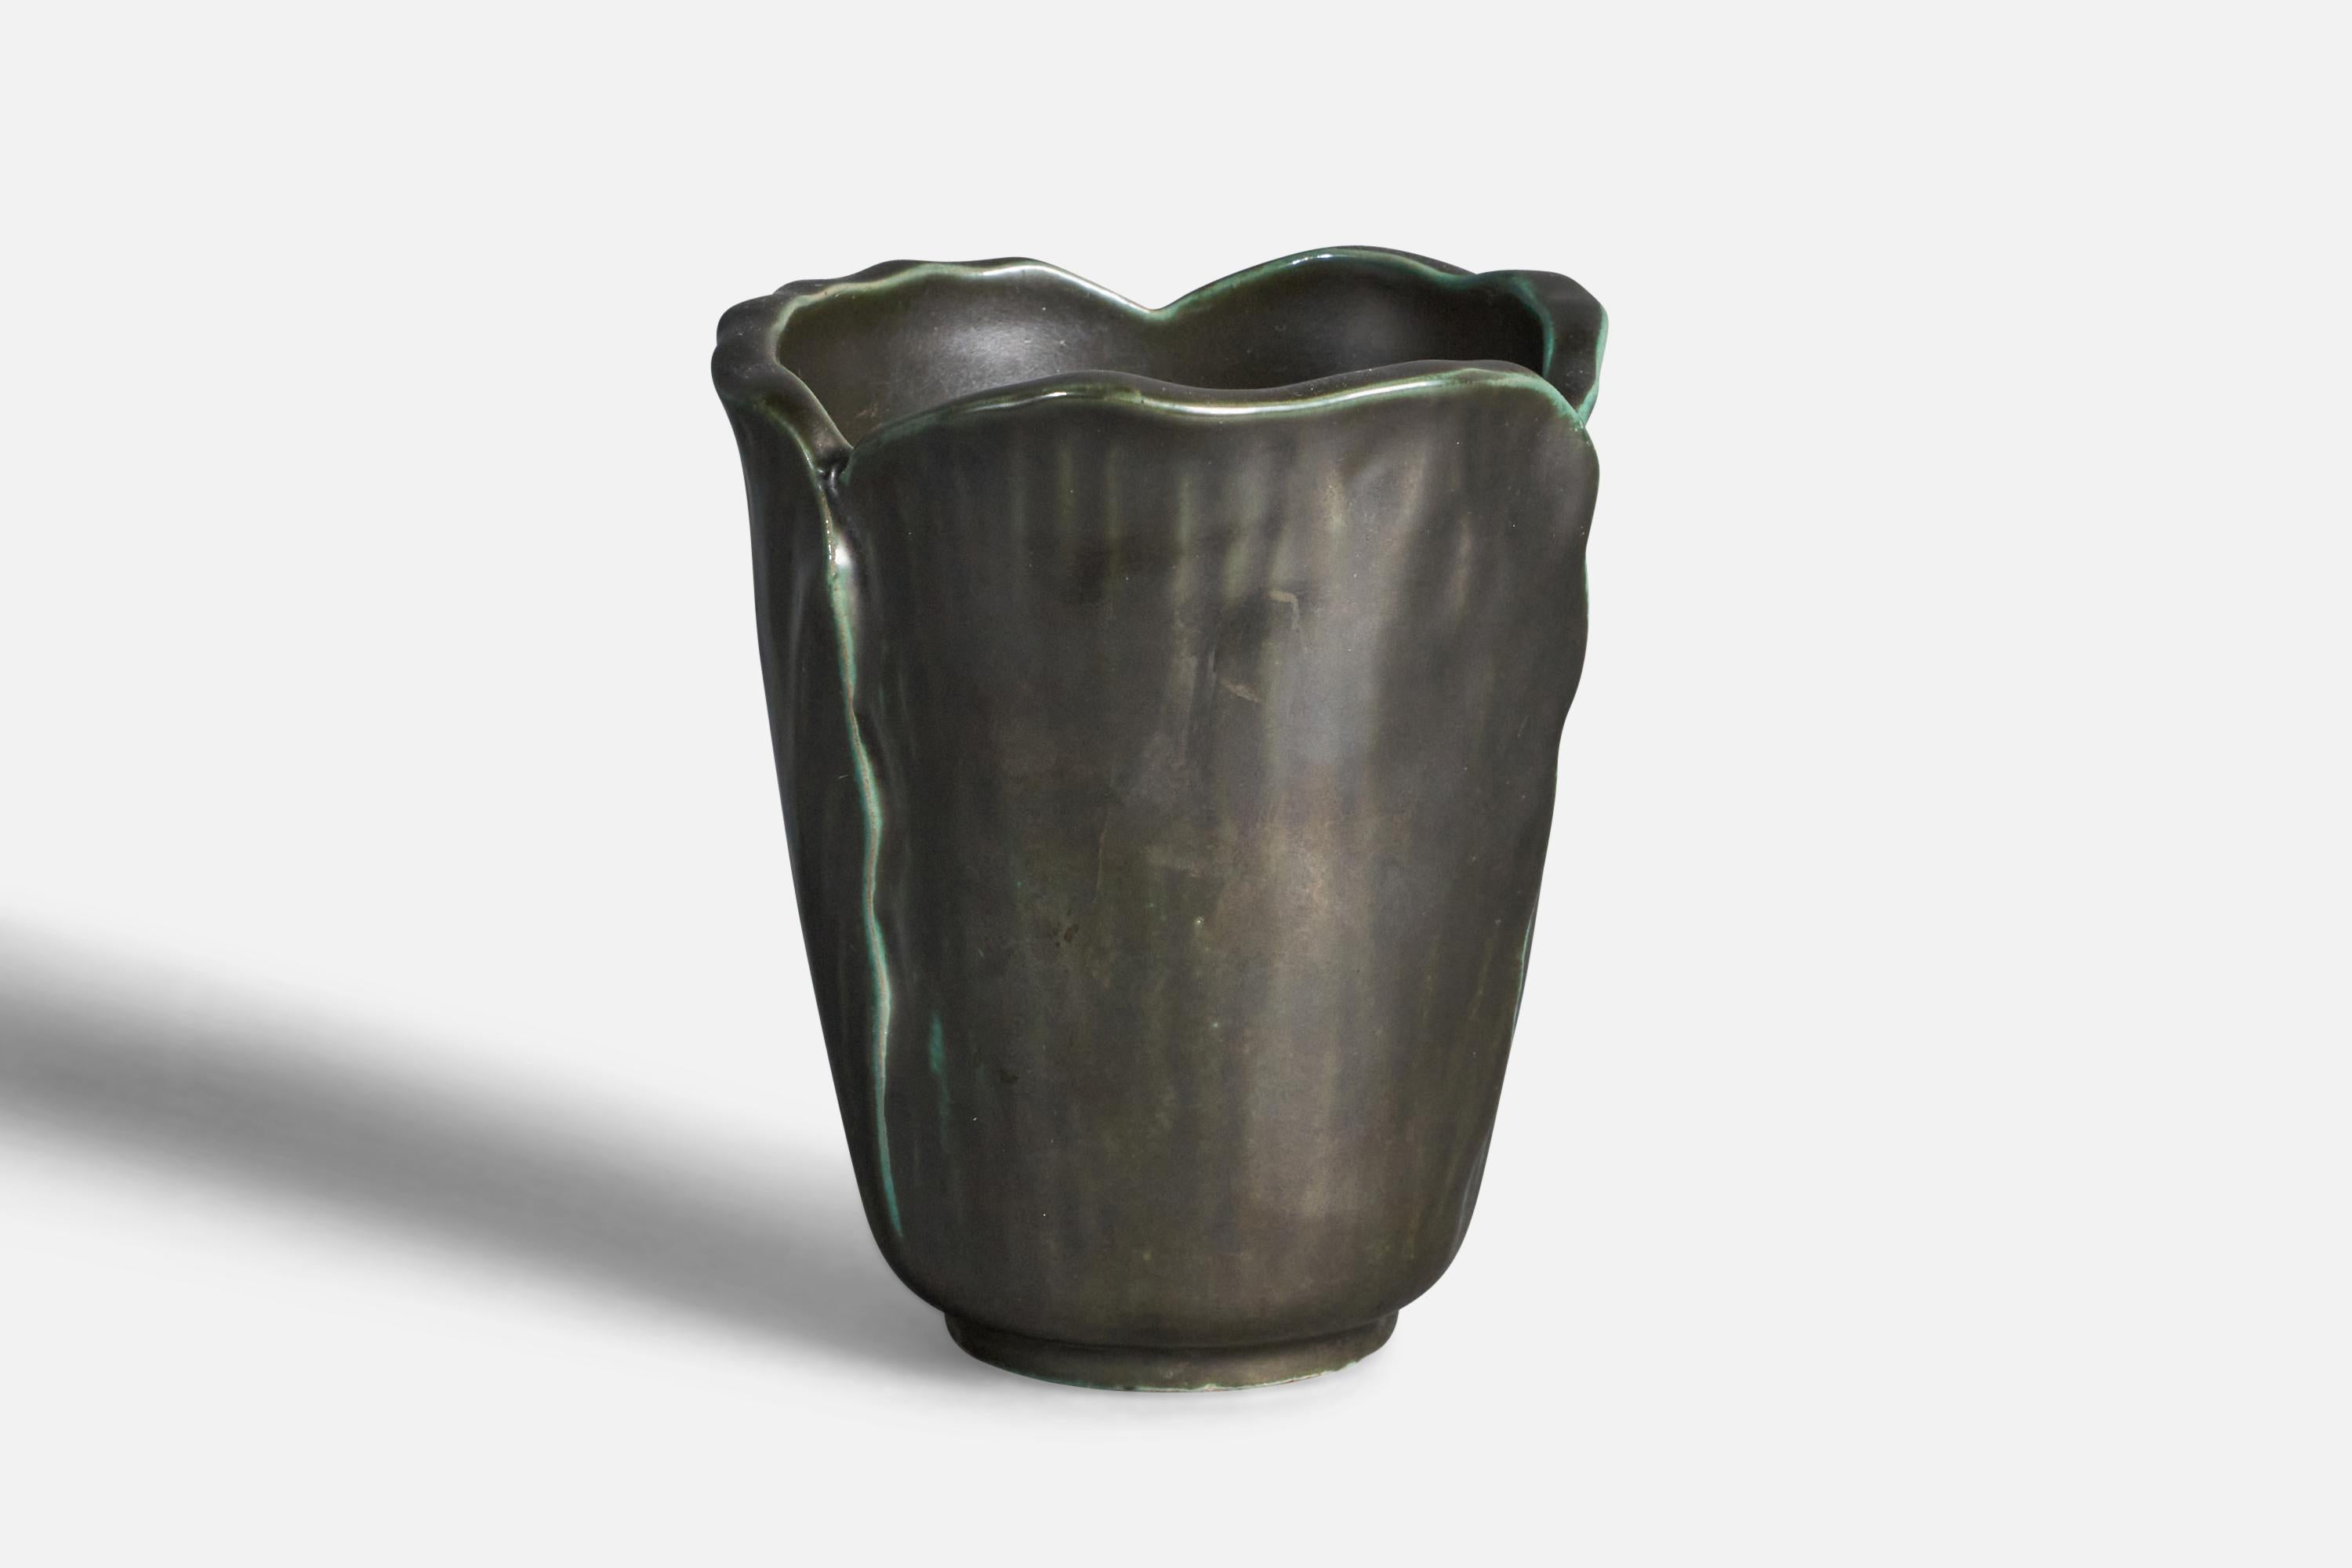 A black and green-glazed earthenware vase designed and produced by Upsala Ekeby, Sweden, 1930s.